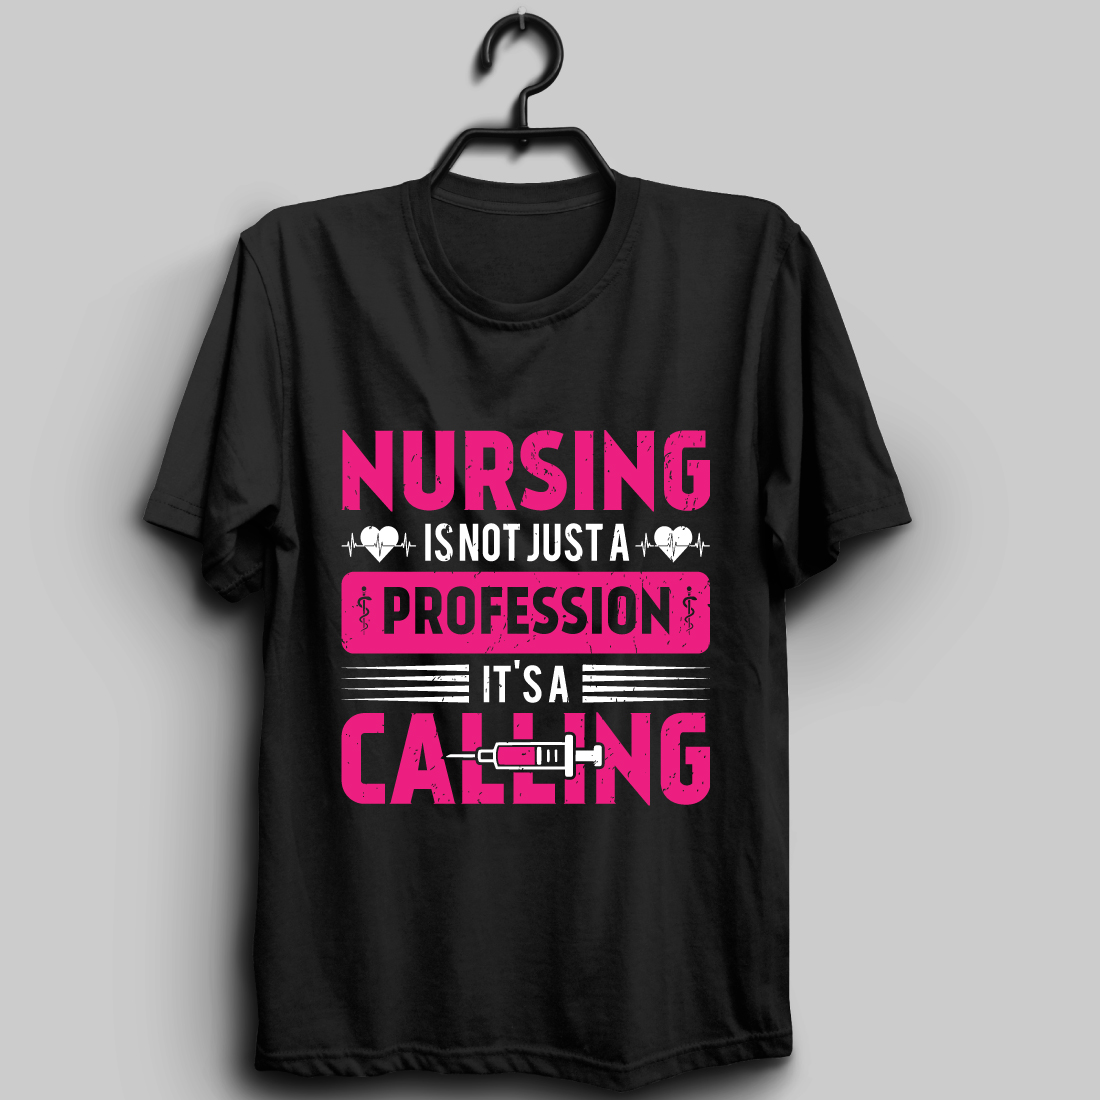 nurse t shirt design 01 139